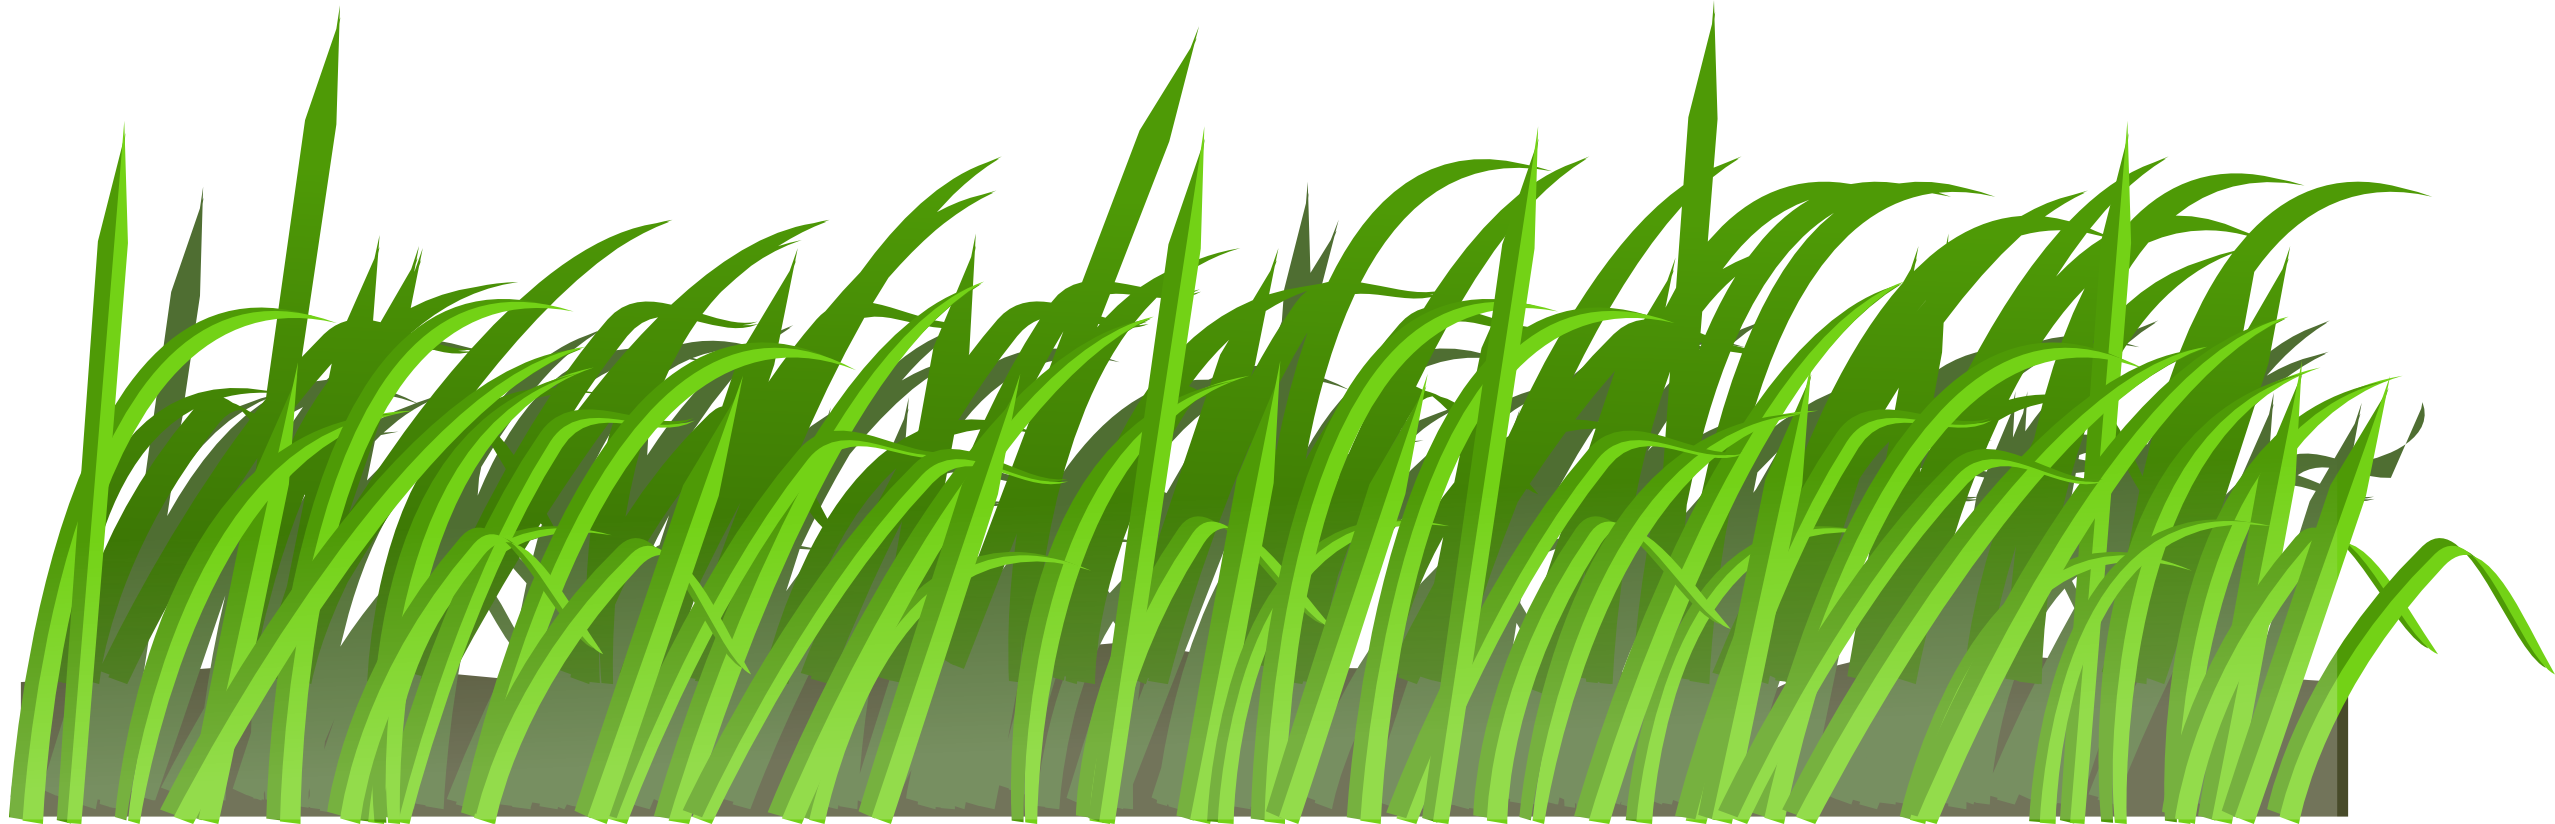 jungle grass clip art - photo #9